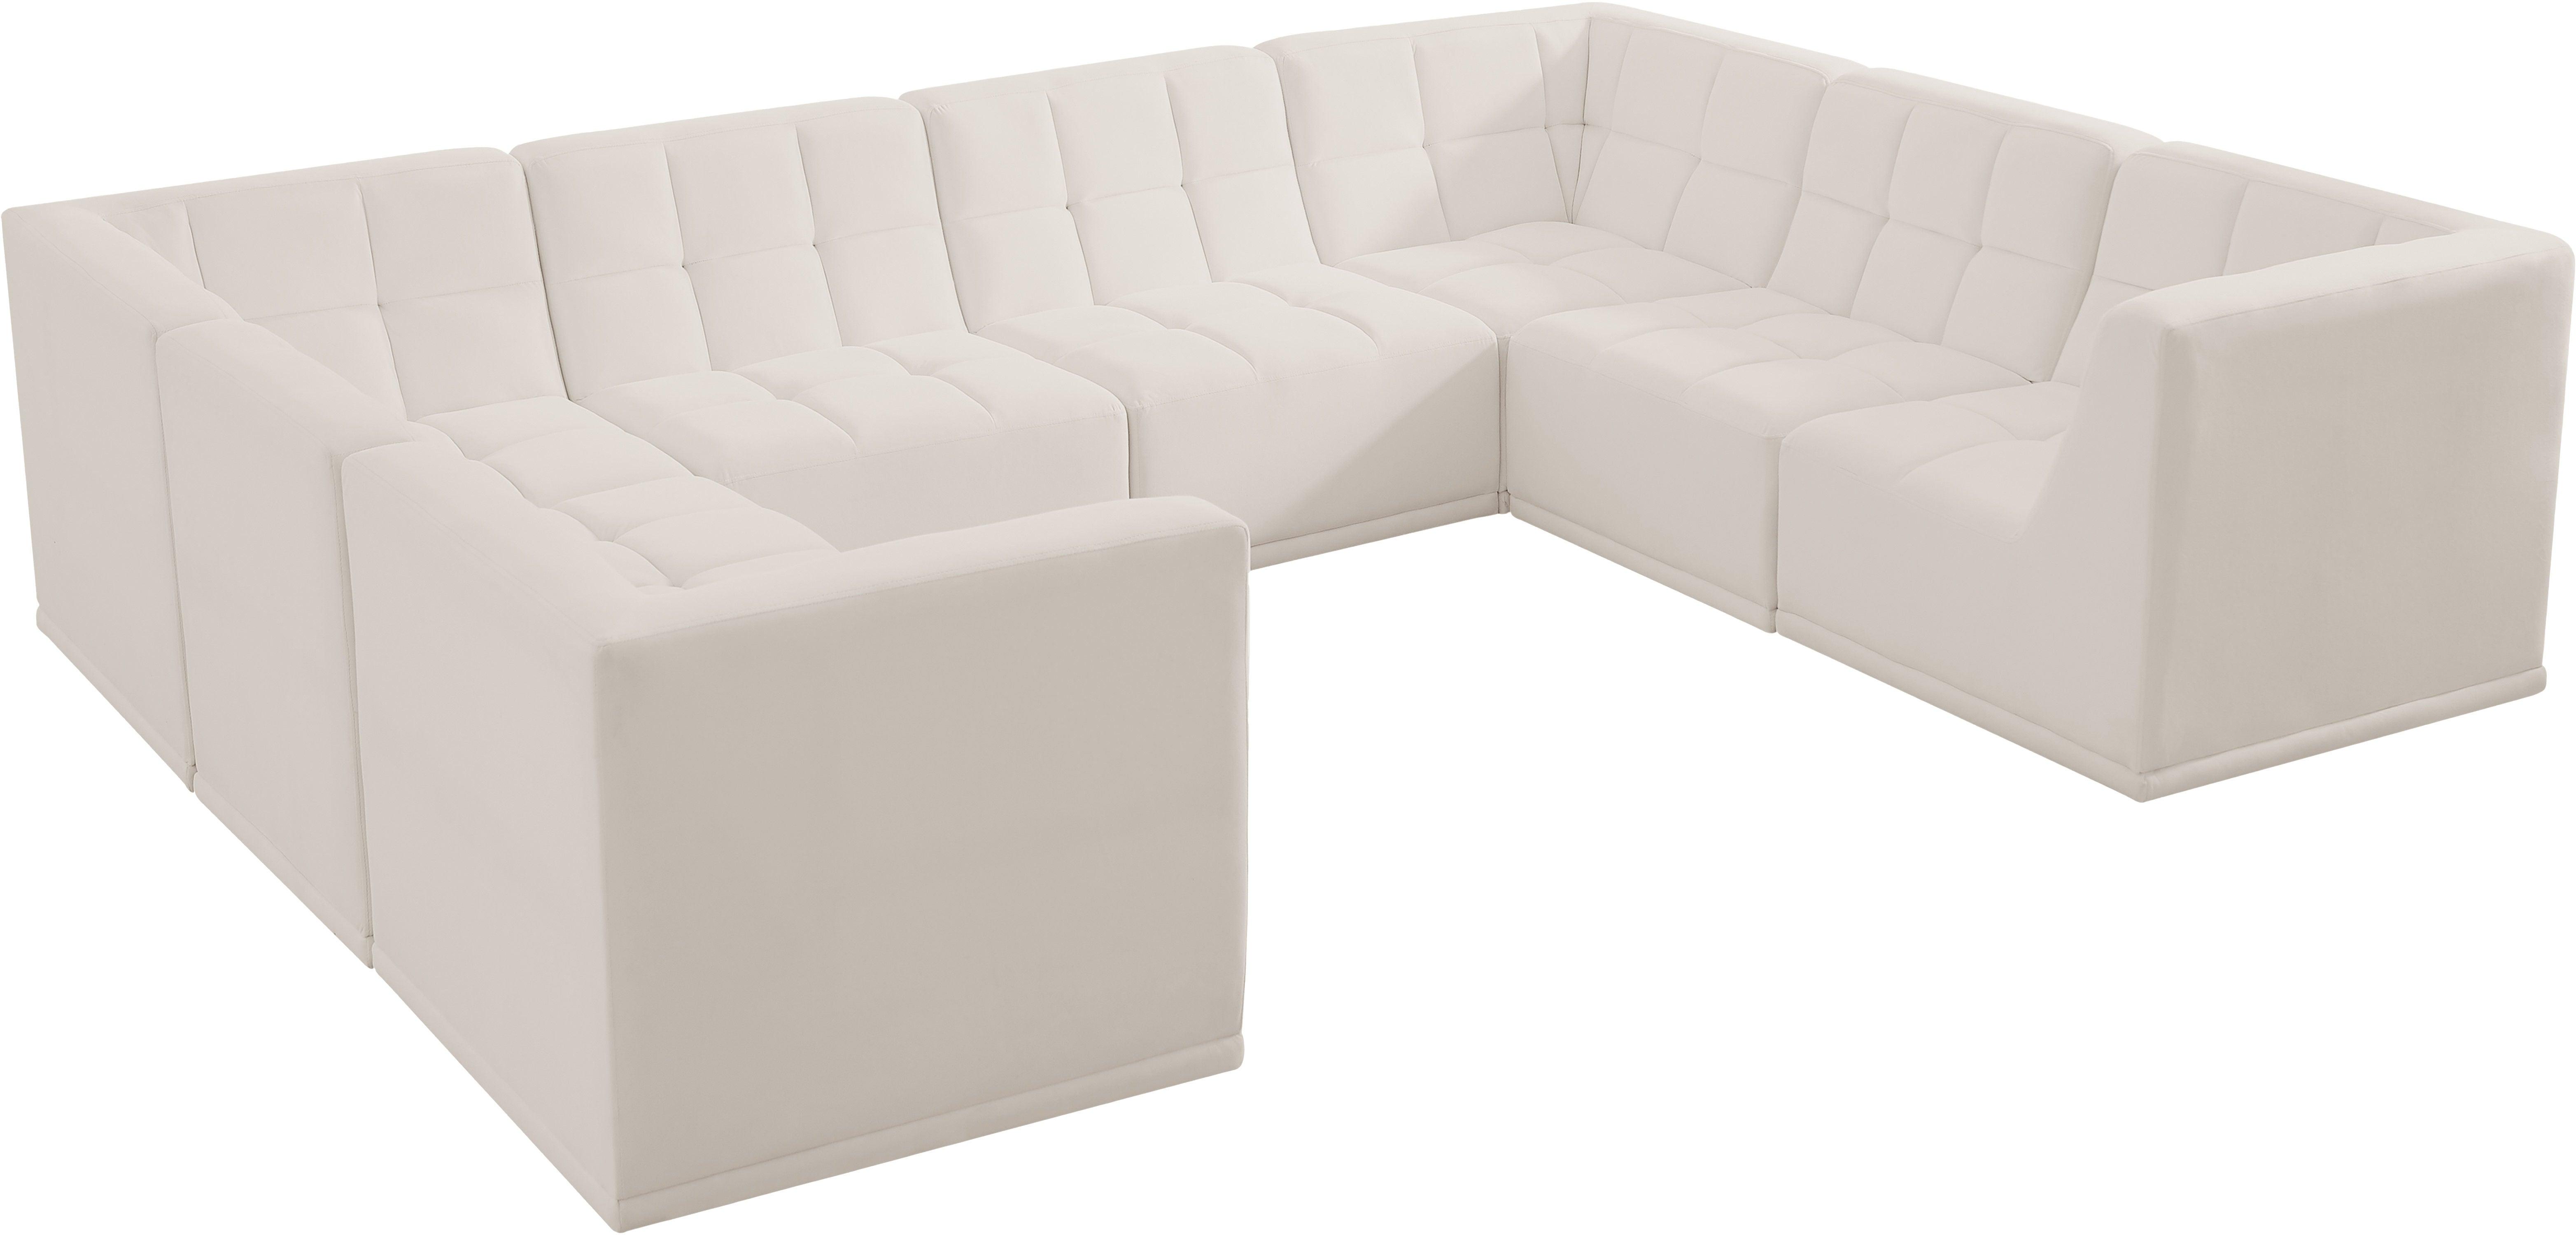 Meridian Furniture - Relax - Modular Sectional - Cream - 5th Avenue Furniture